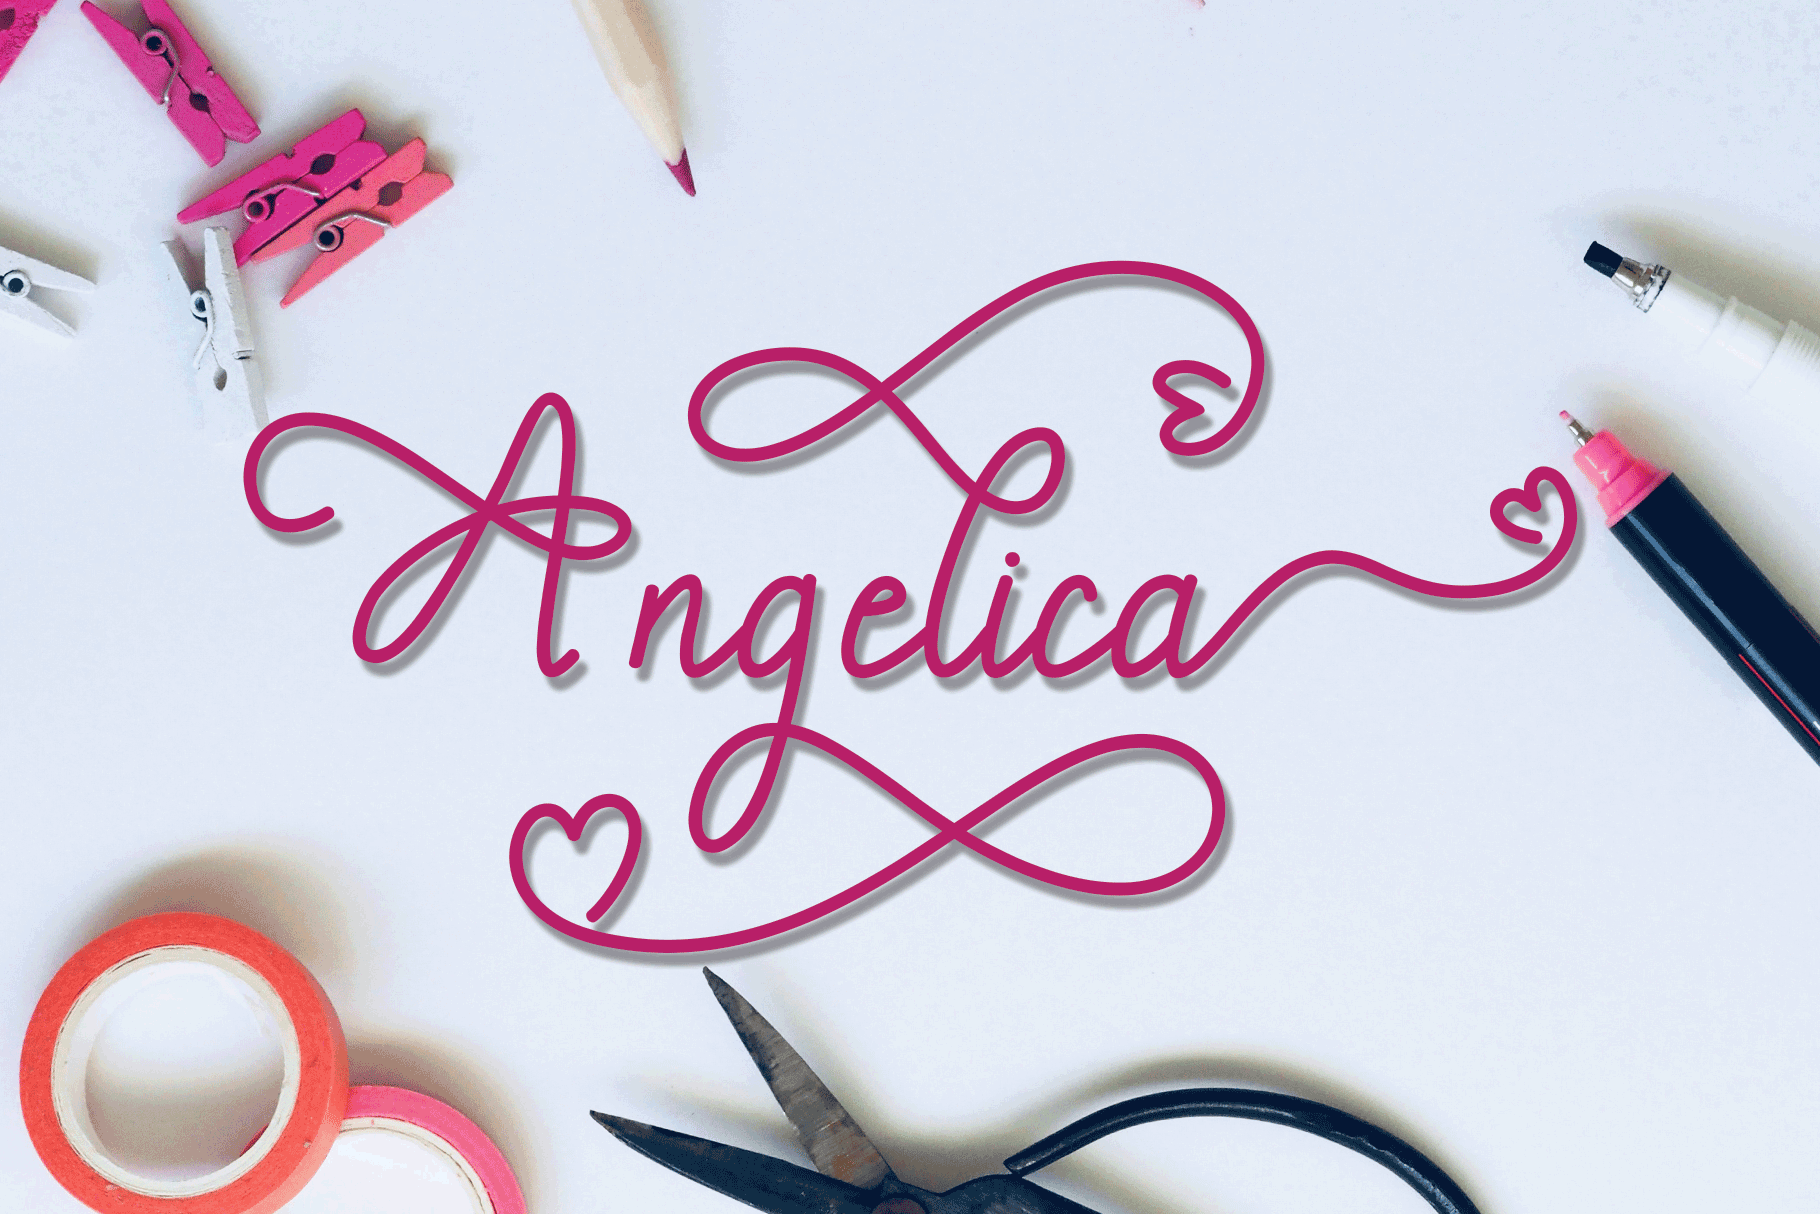 Angelica 